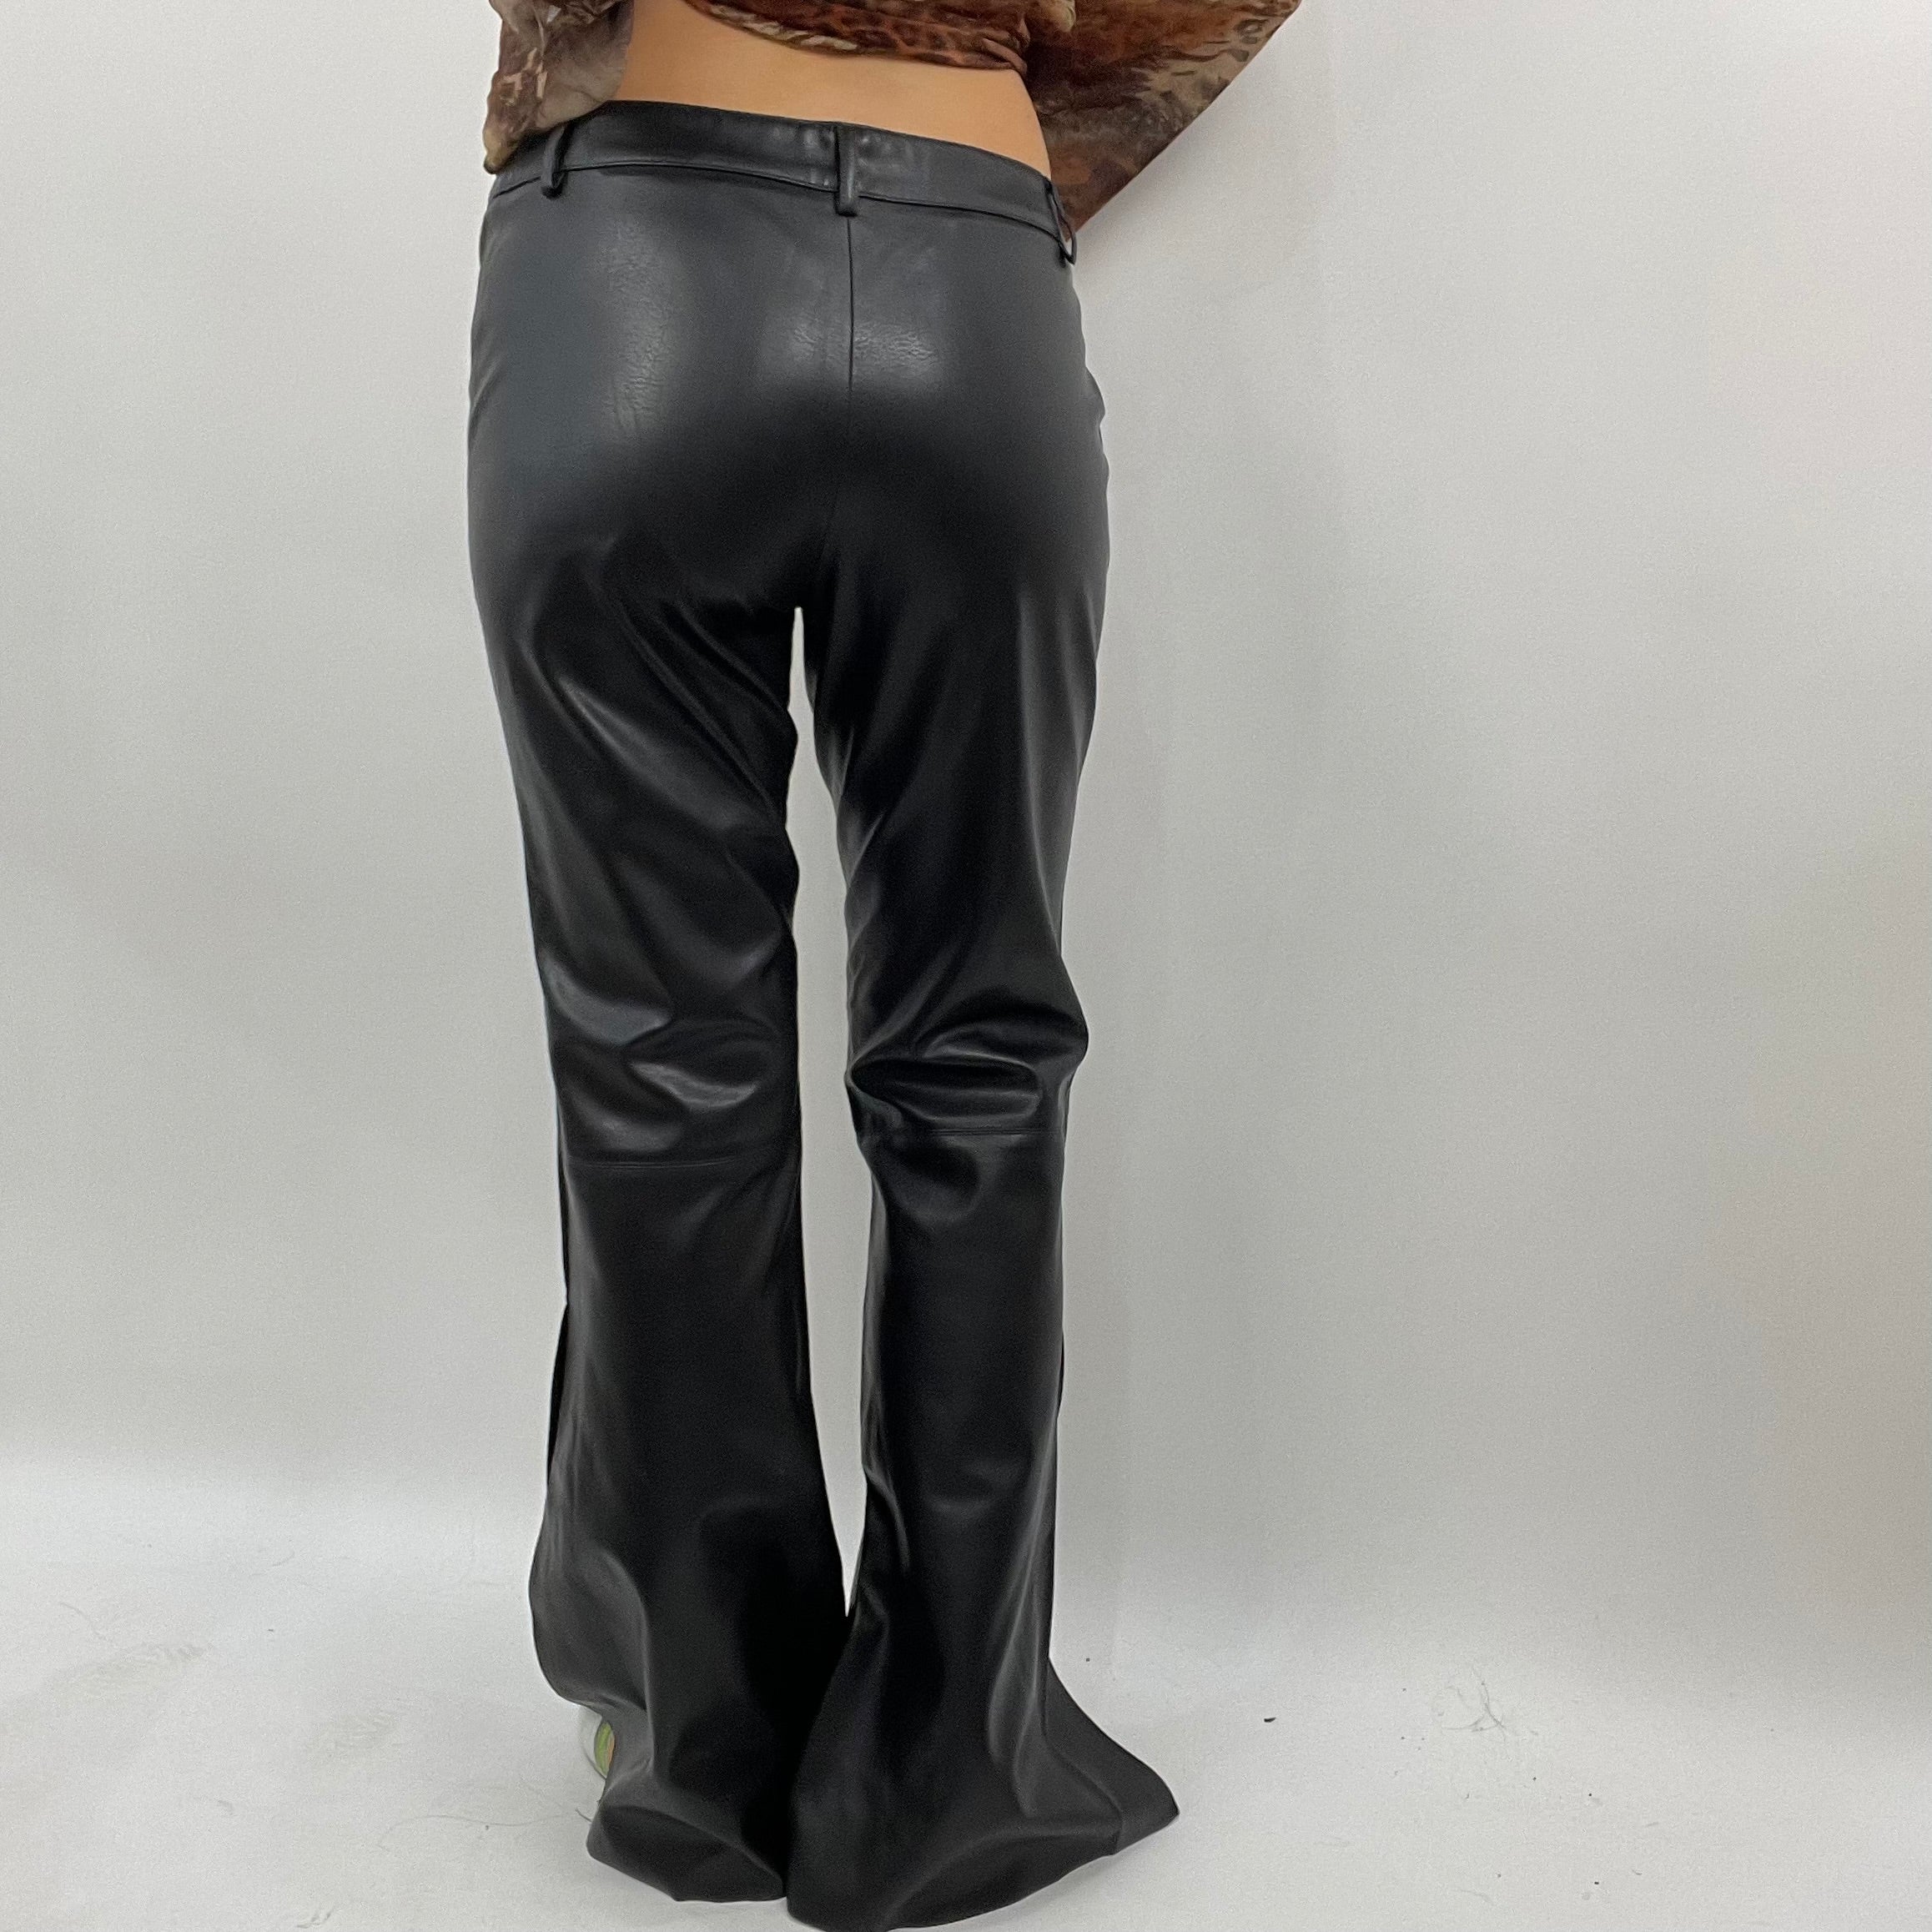 Ricano LOW CUT 2 - Leather trousers - black - Zalando.de